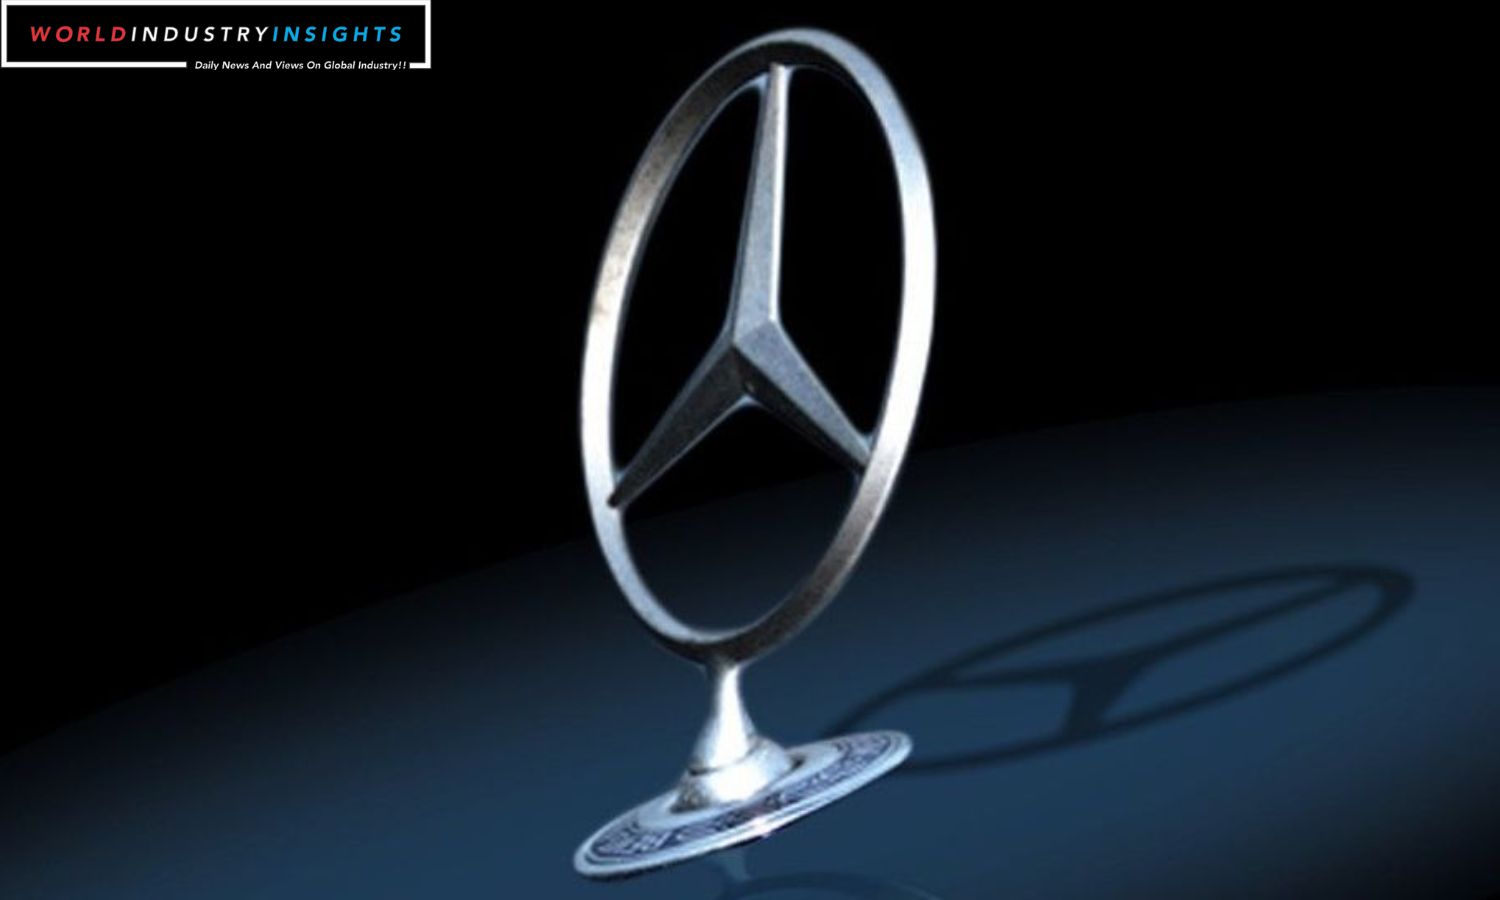 Mercedes-Benz Electric Vehicle Battle